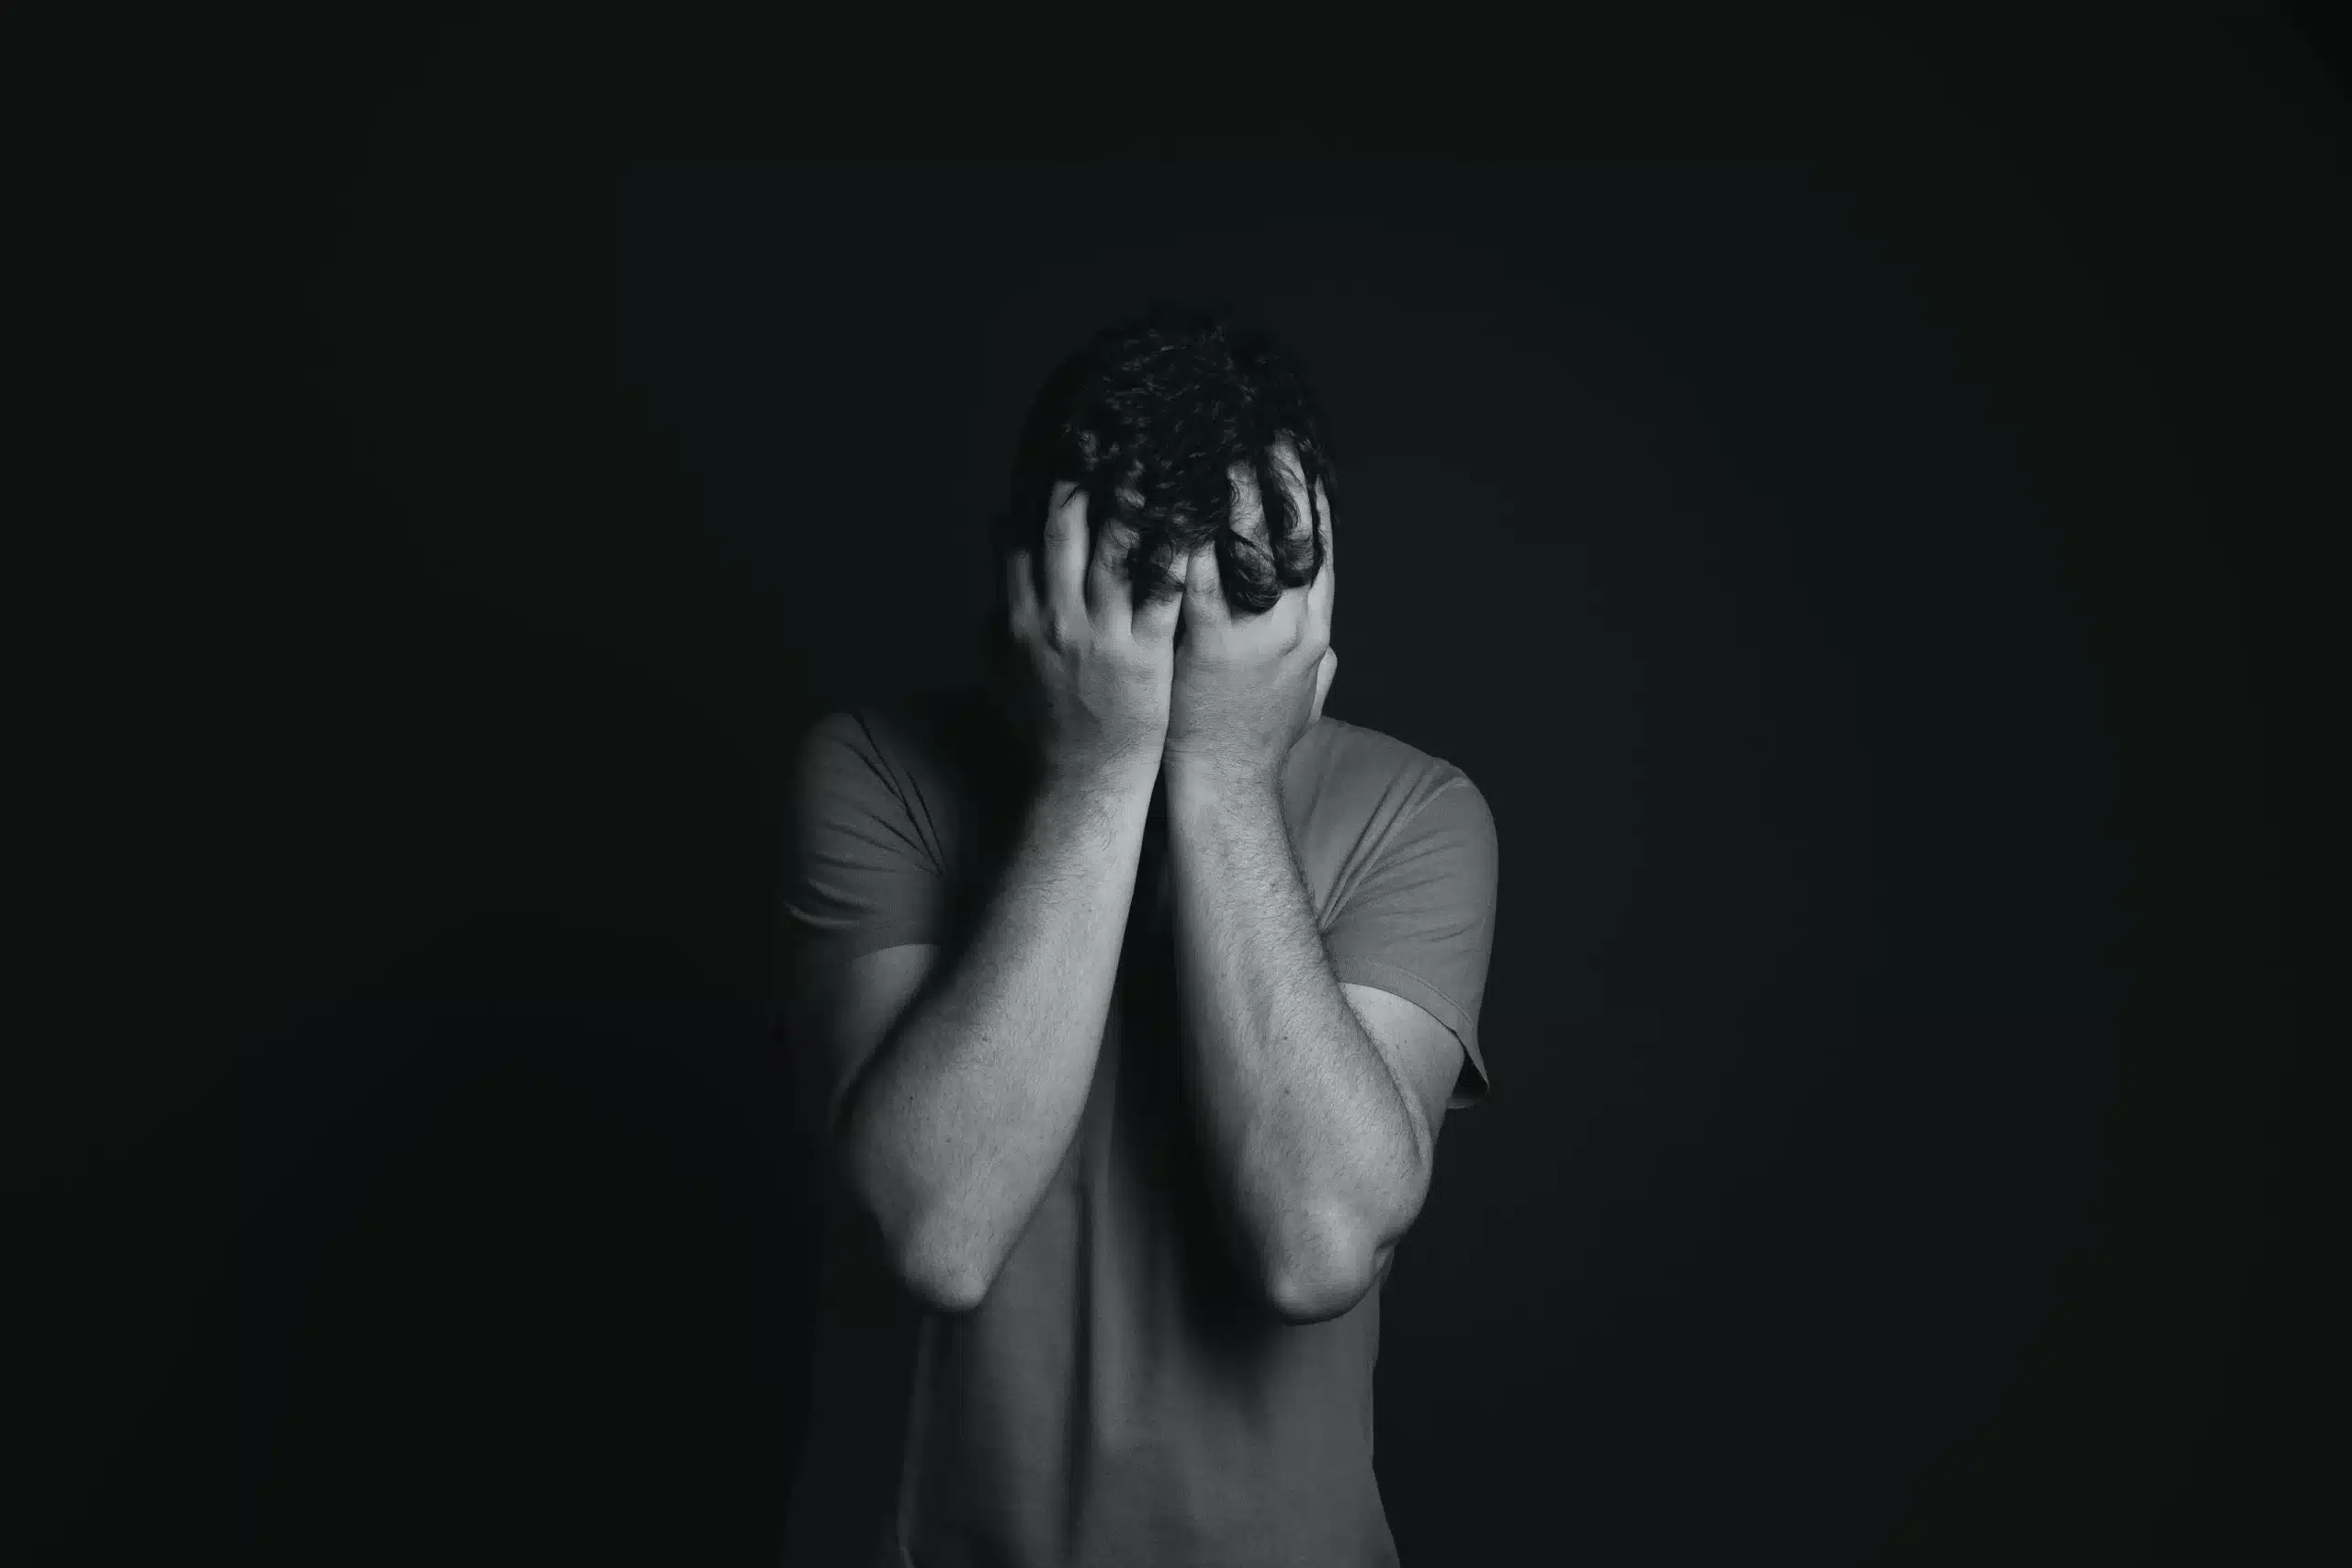 Symptoms of depression in men